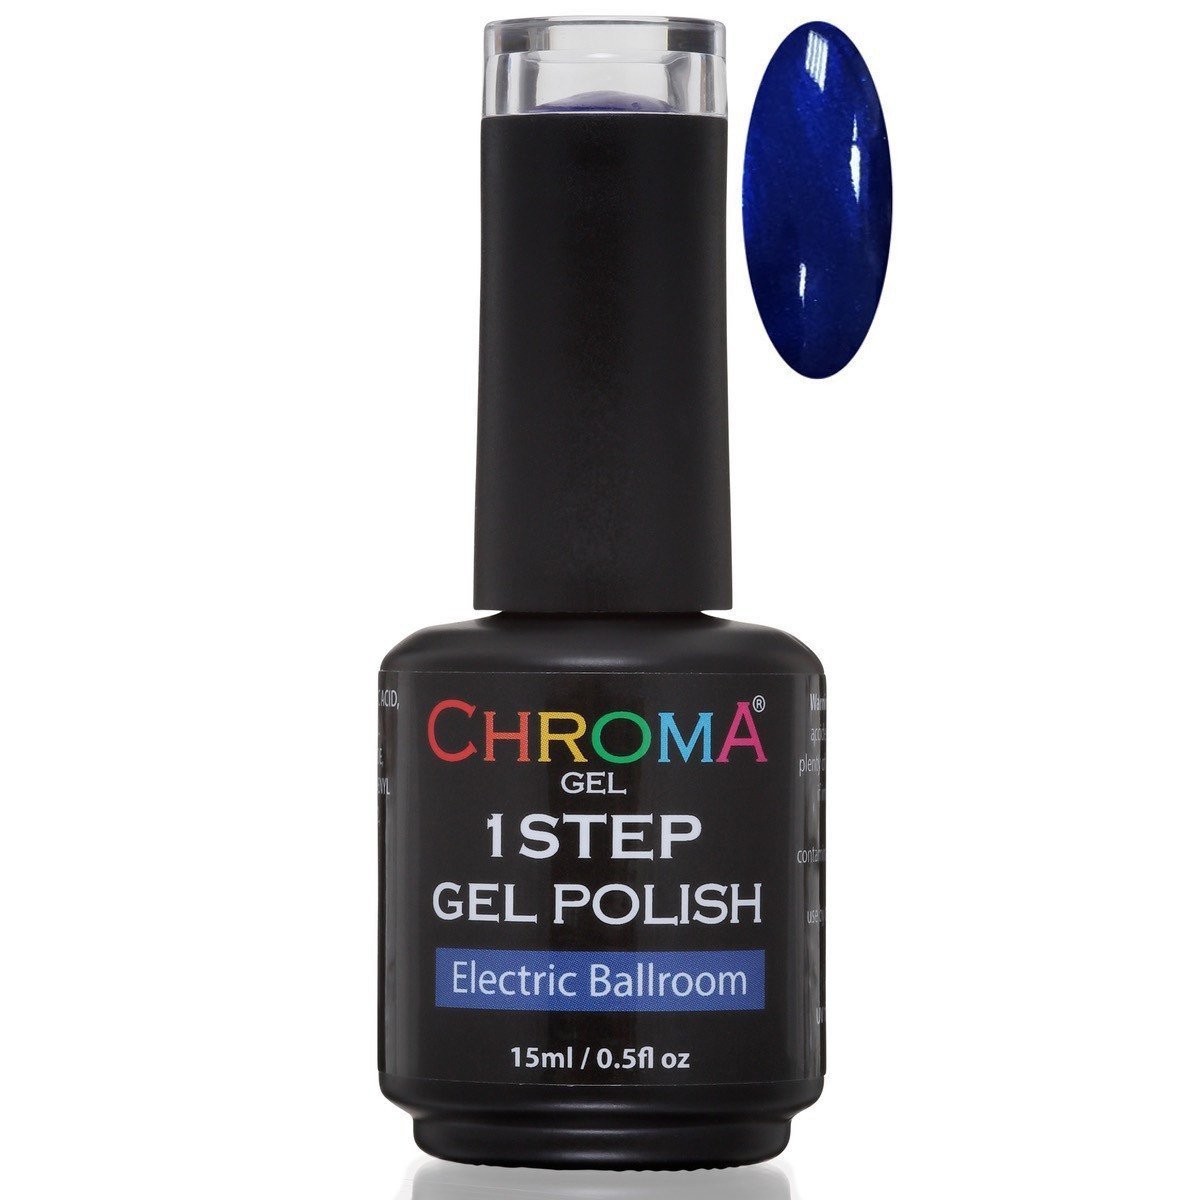 Chroma Gel 1 Step Gel Polish Electric Ballroom No.32 - Chroma Gel